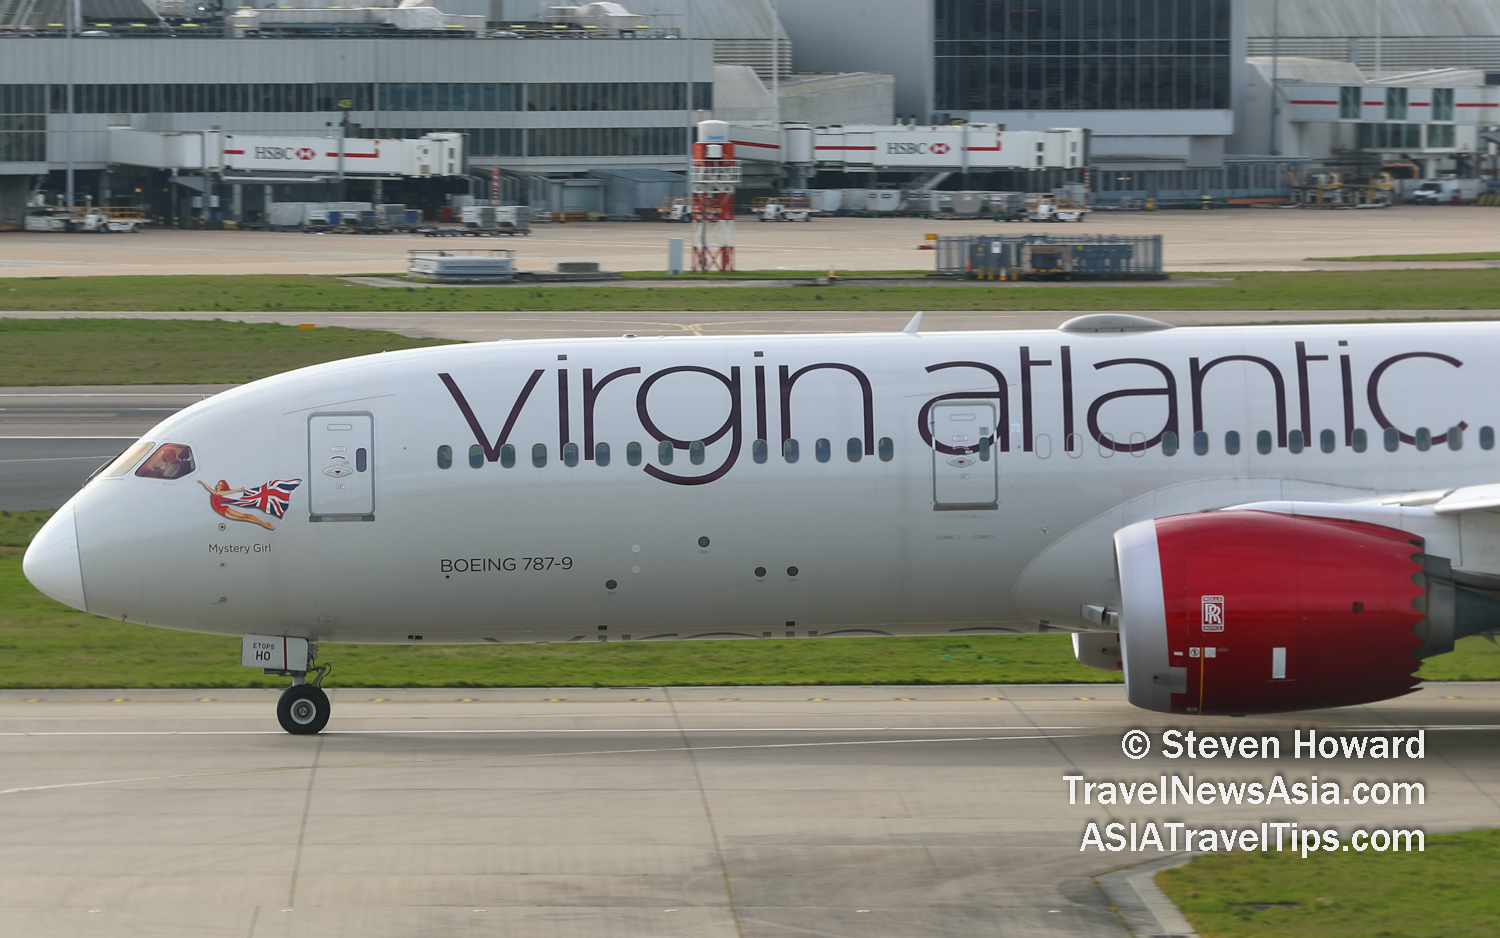 Virgin Atlantic Boeing 787-9 reg: G-VWHO. Picture by Steven Howard of TravelNewsAsia.com Click to enlarge.